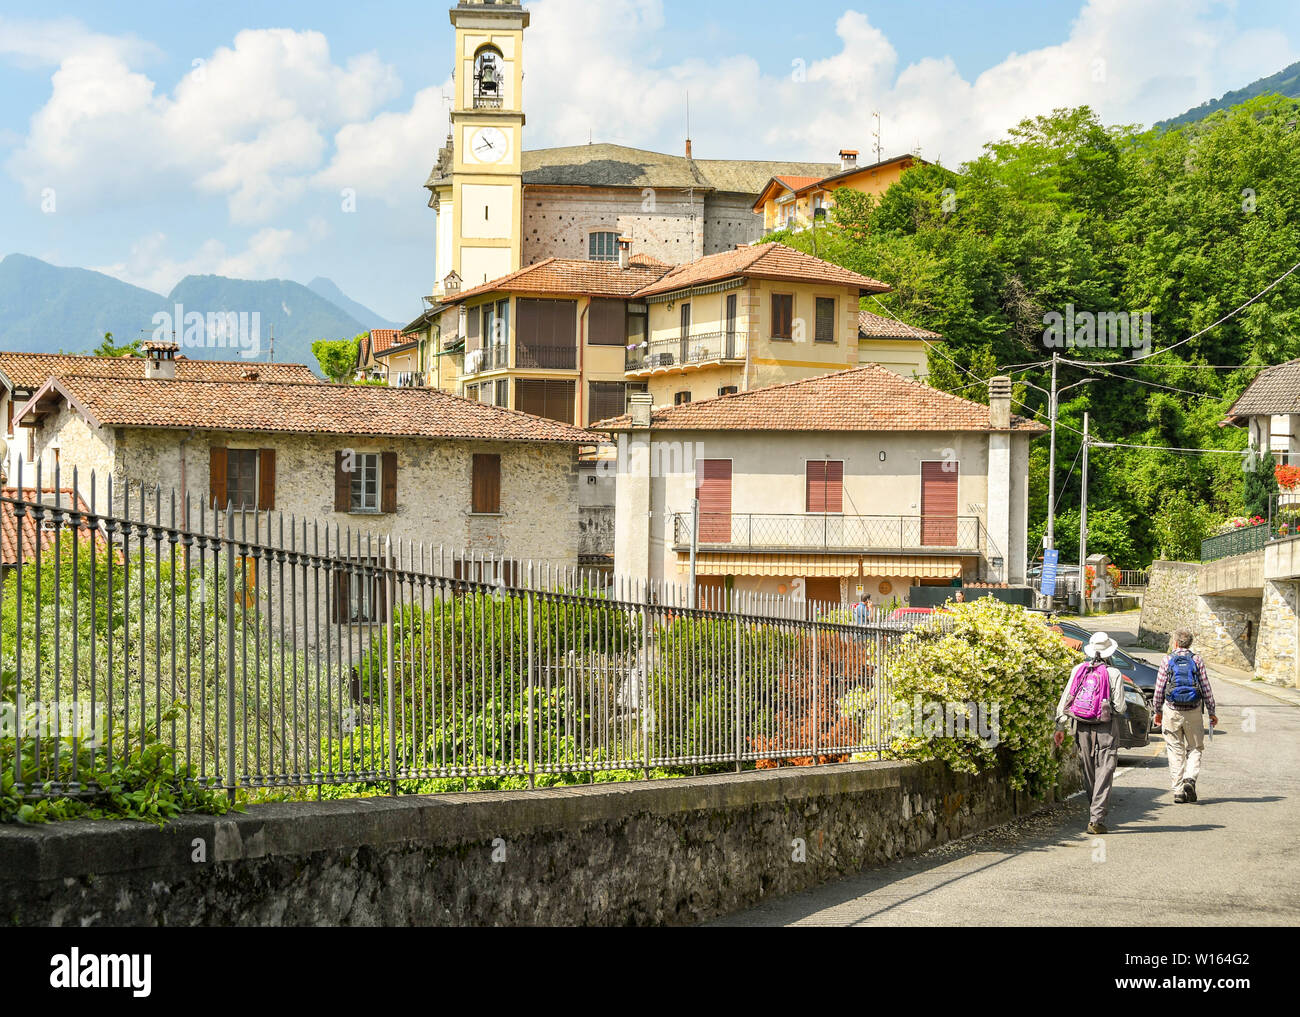 LAKE COMO, ITALY - JUNE 2019: People walking on the trail which runs for several miles around Lake Como - the Greenway del Lago di Como. Stock Photo